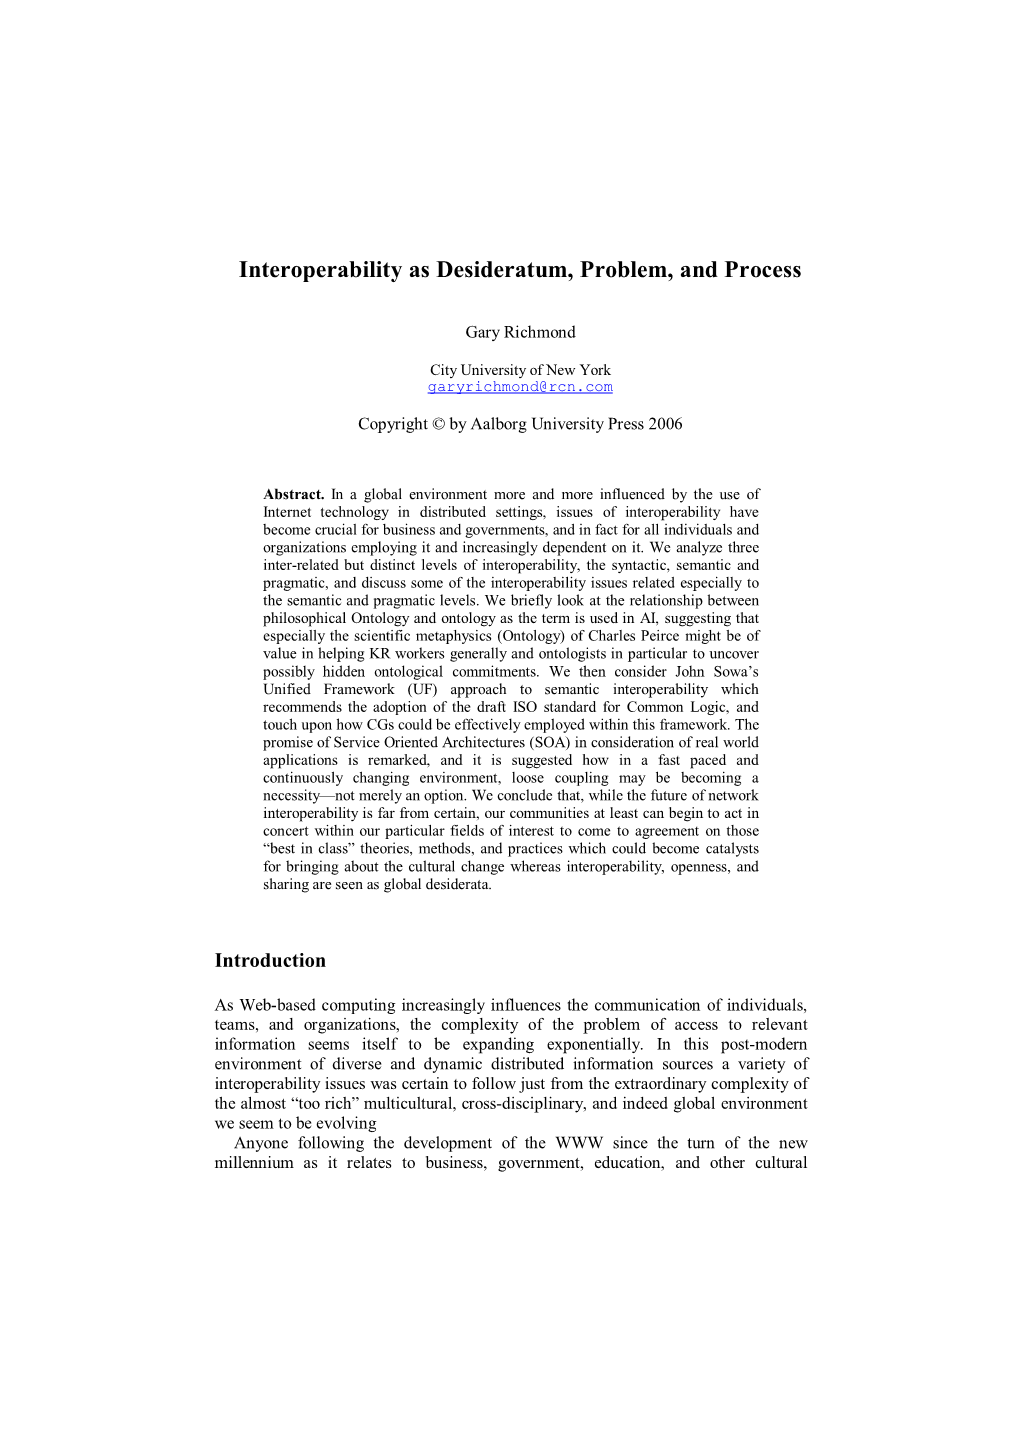 Interoperability As Desideratum, Problem, and Process